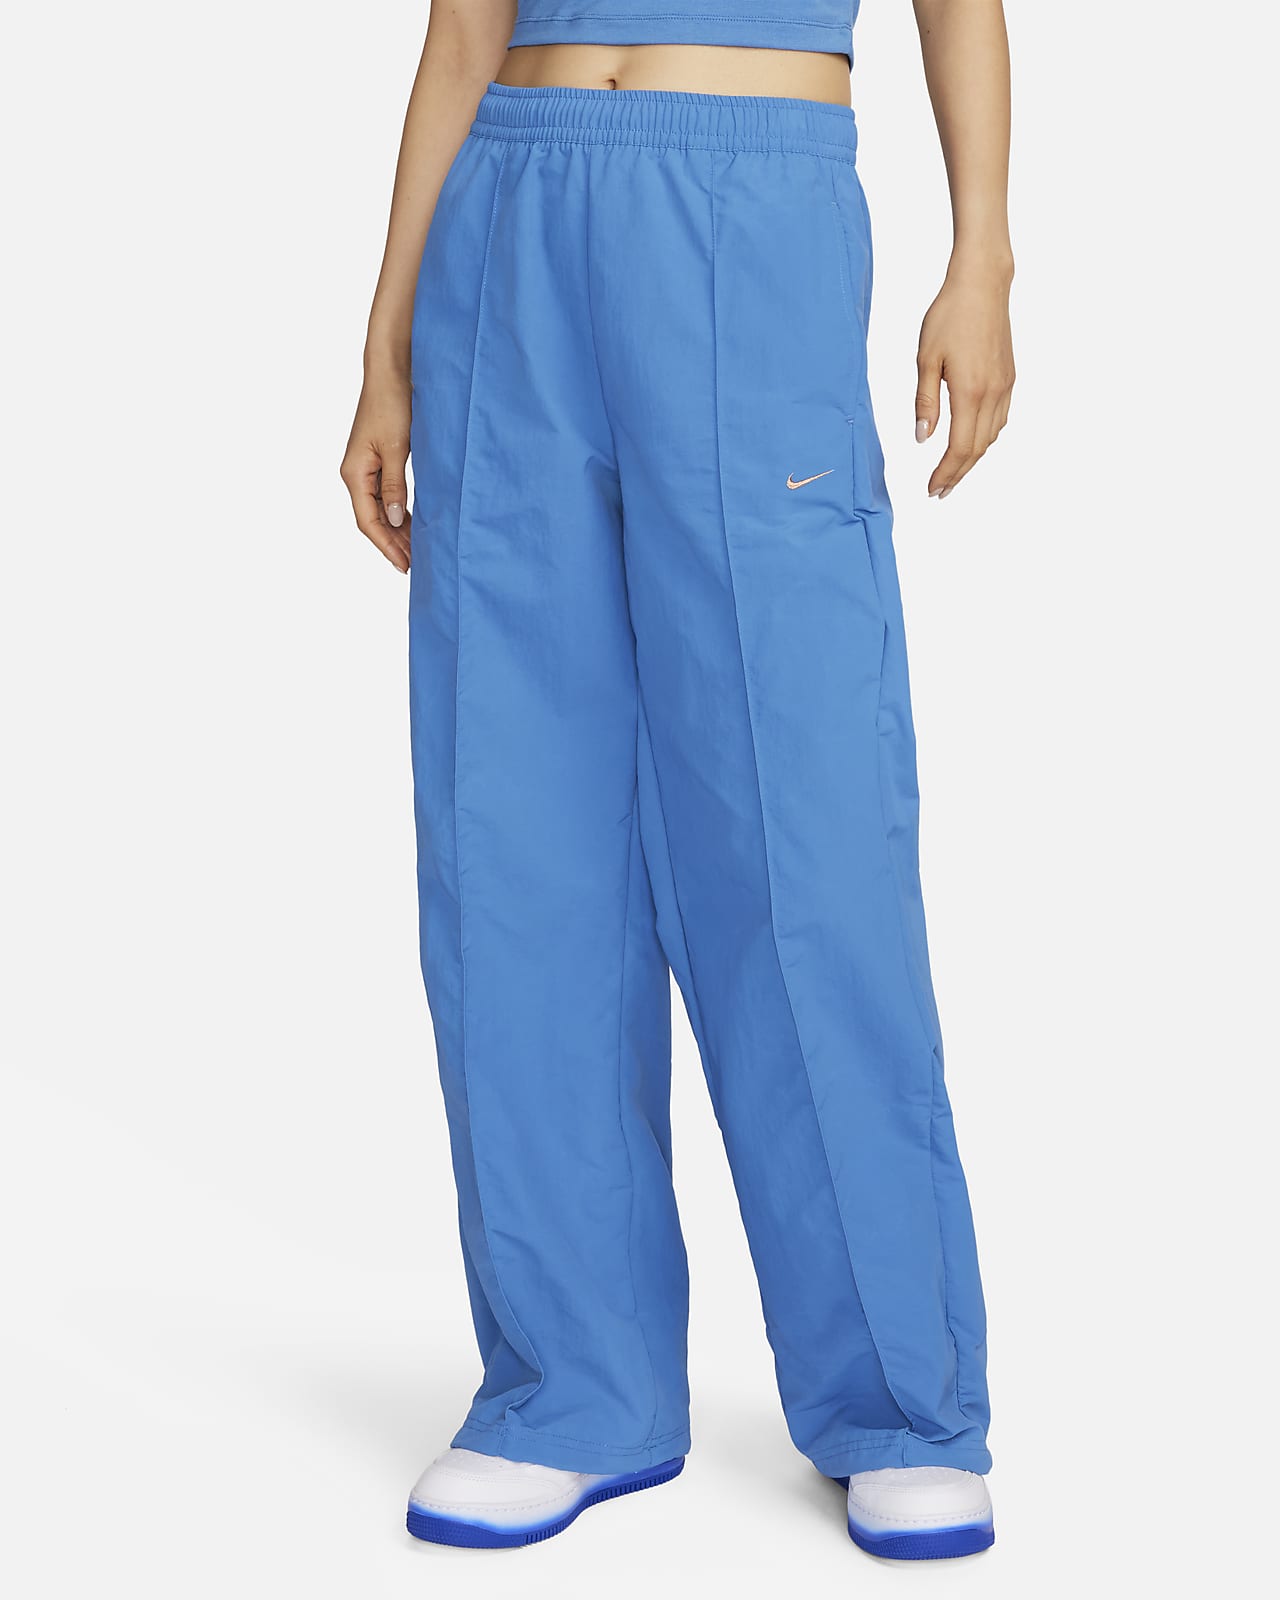 Nike Track Pants Womens Size M 8-10 Navy Blue White Stripe Zip Mid Rise  Athletic | eBay